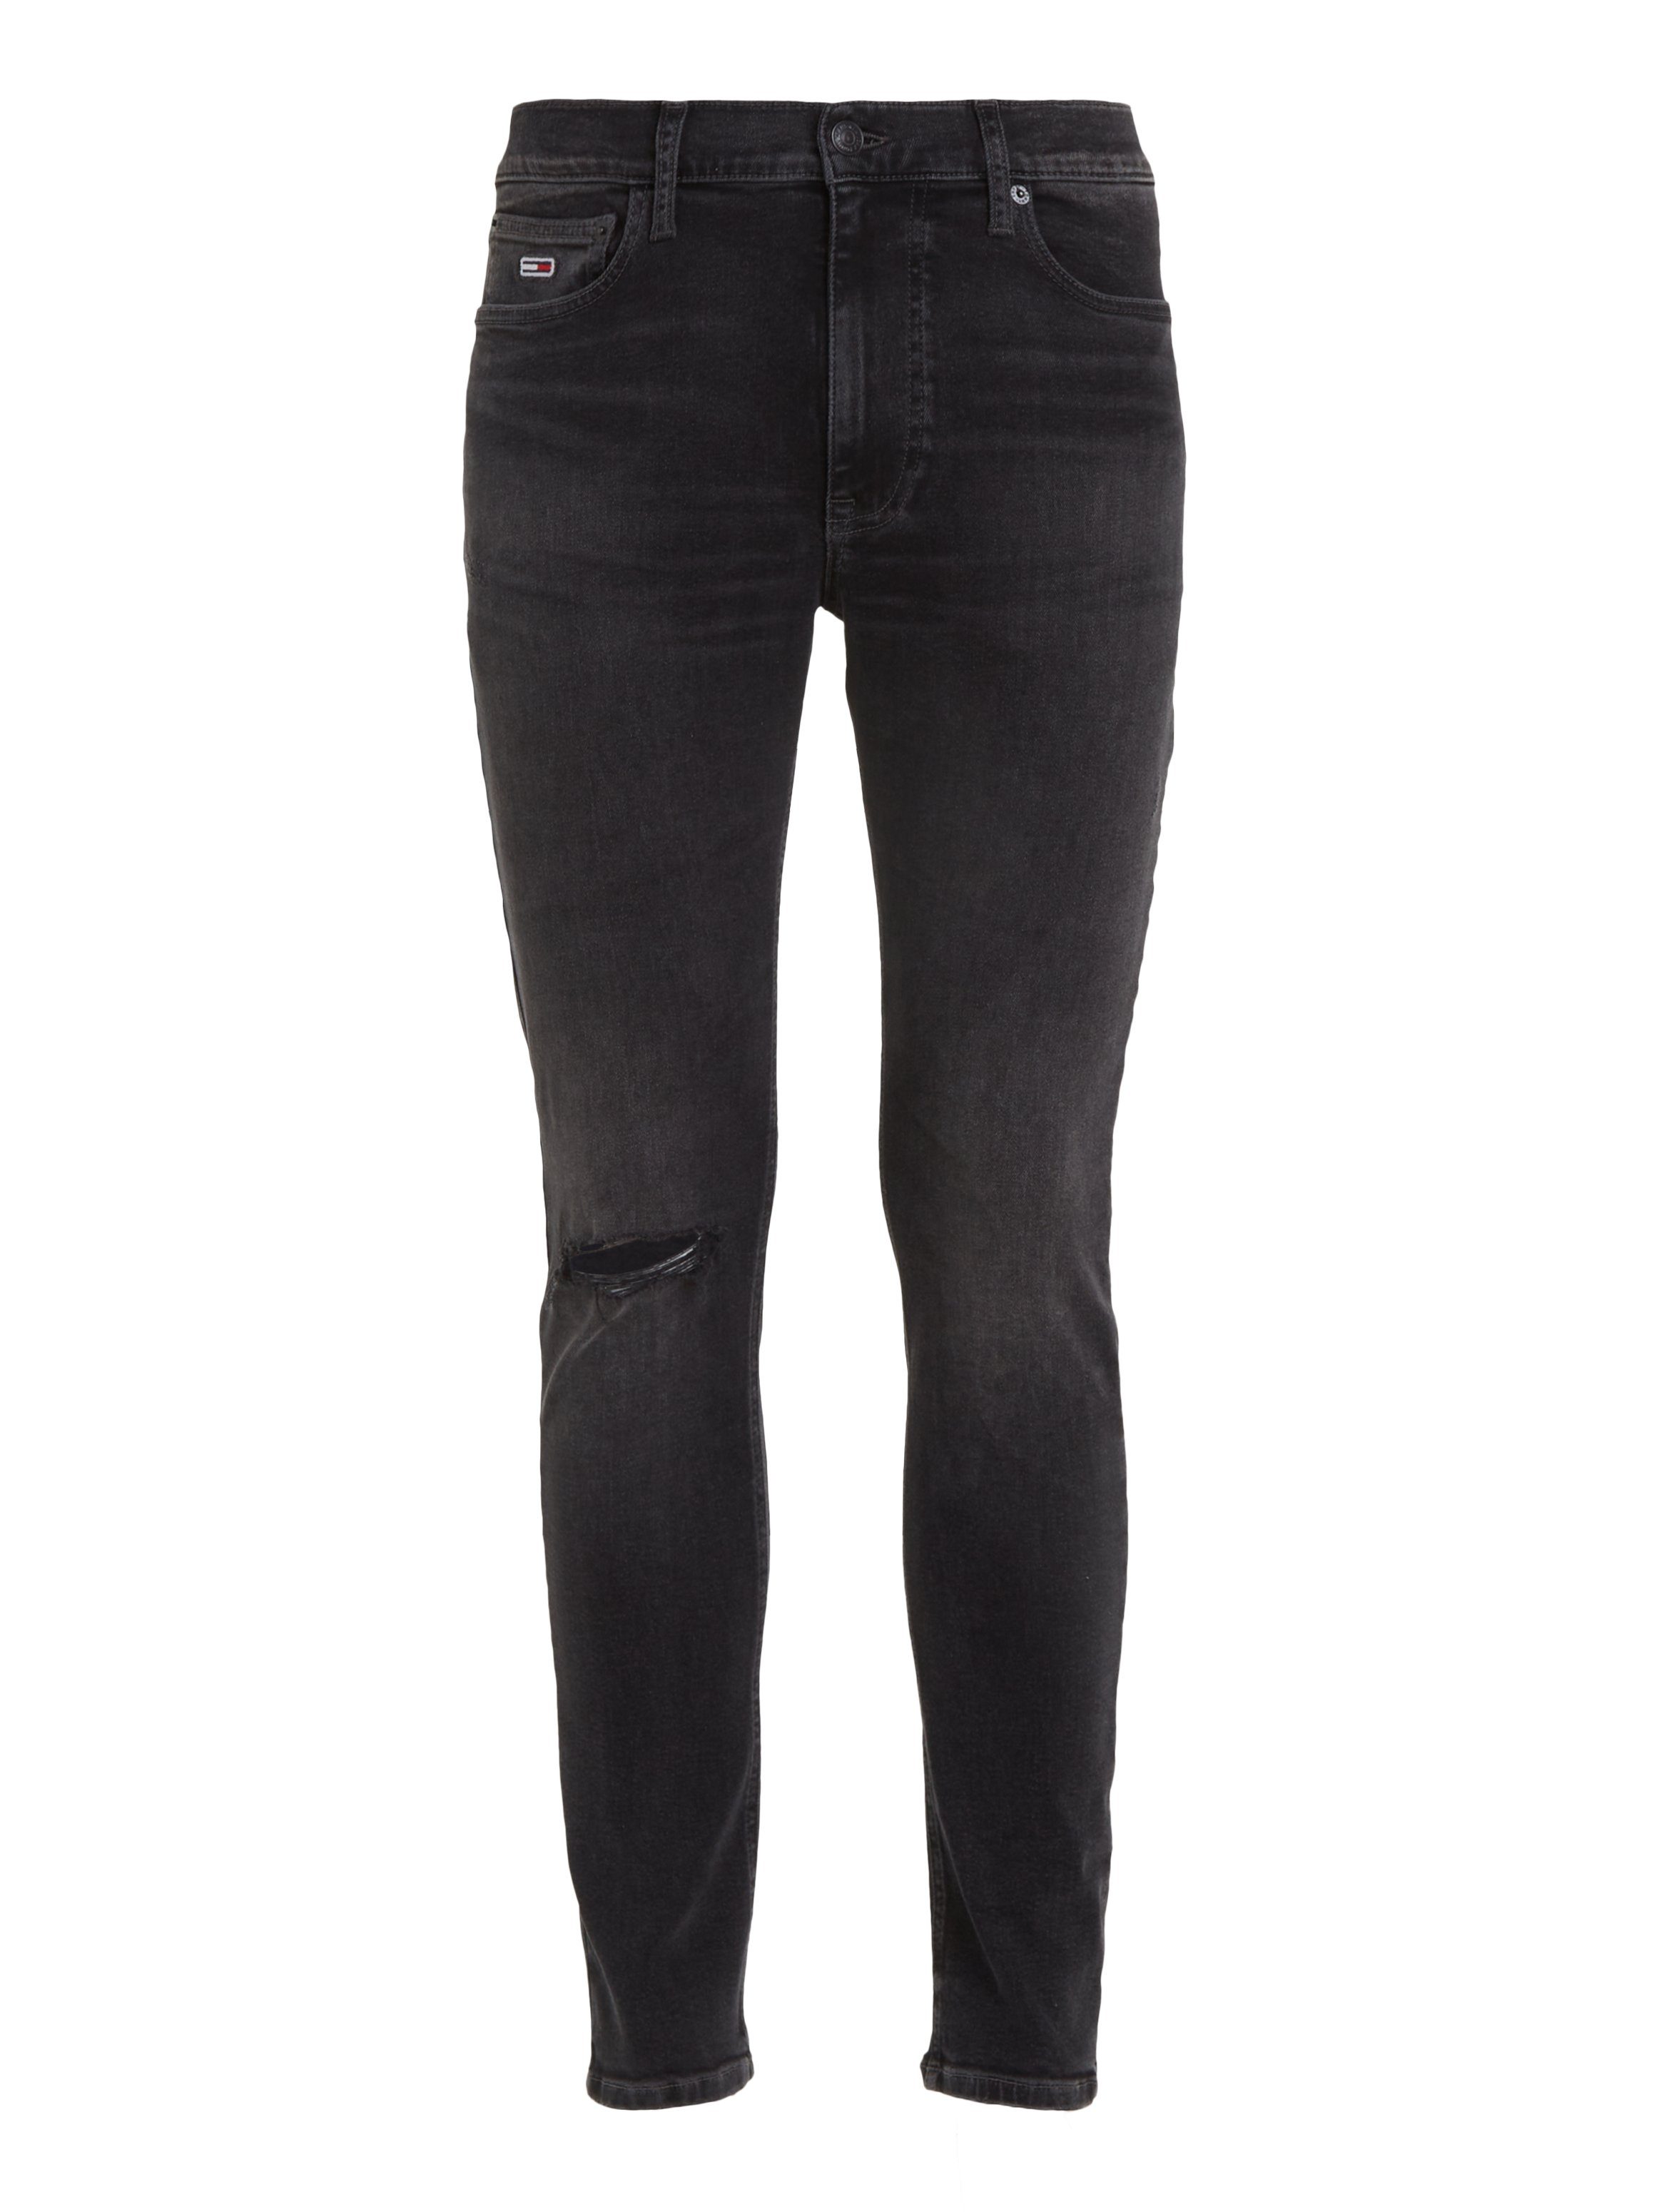 SIMON SKNY Denim im Tommy Black 5-Pocket-Style Jeans Skinny-fit-Jeans